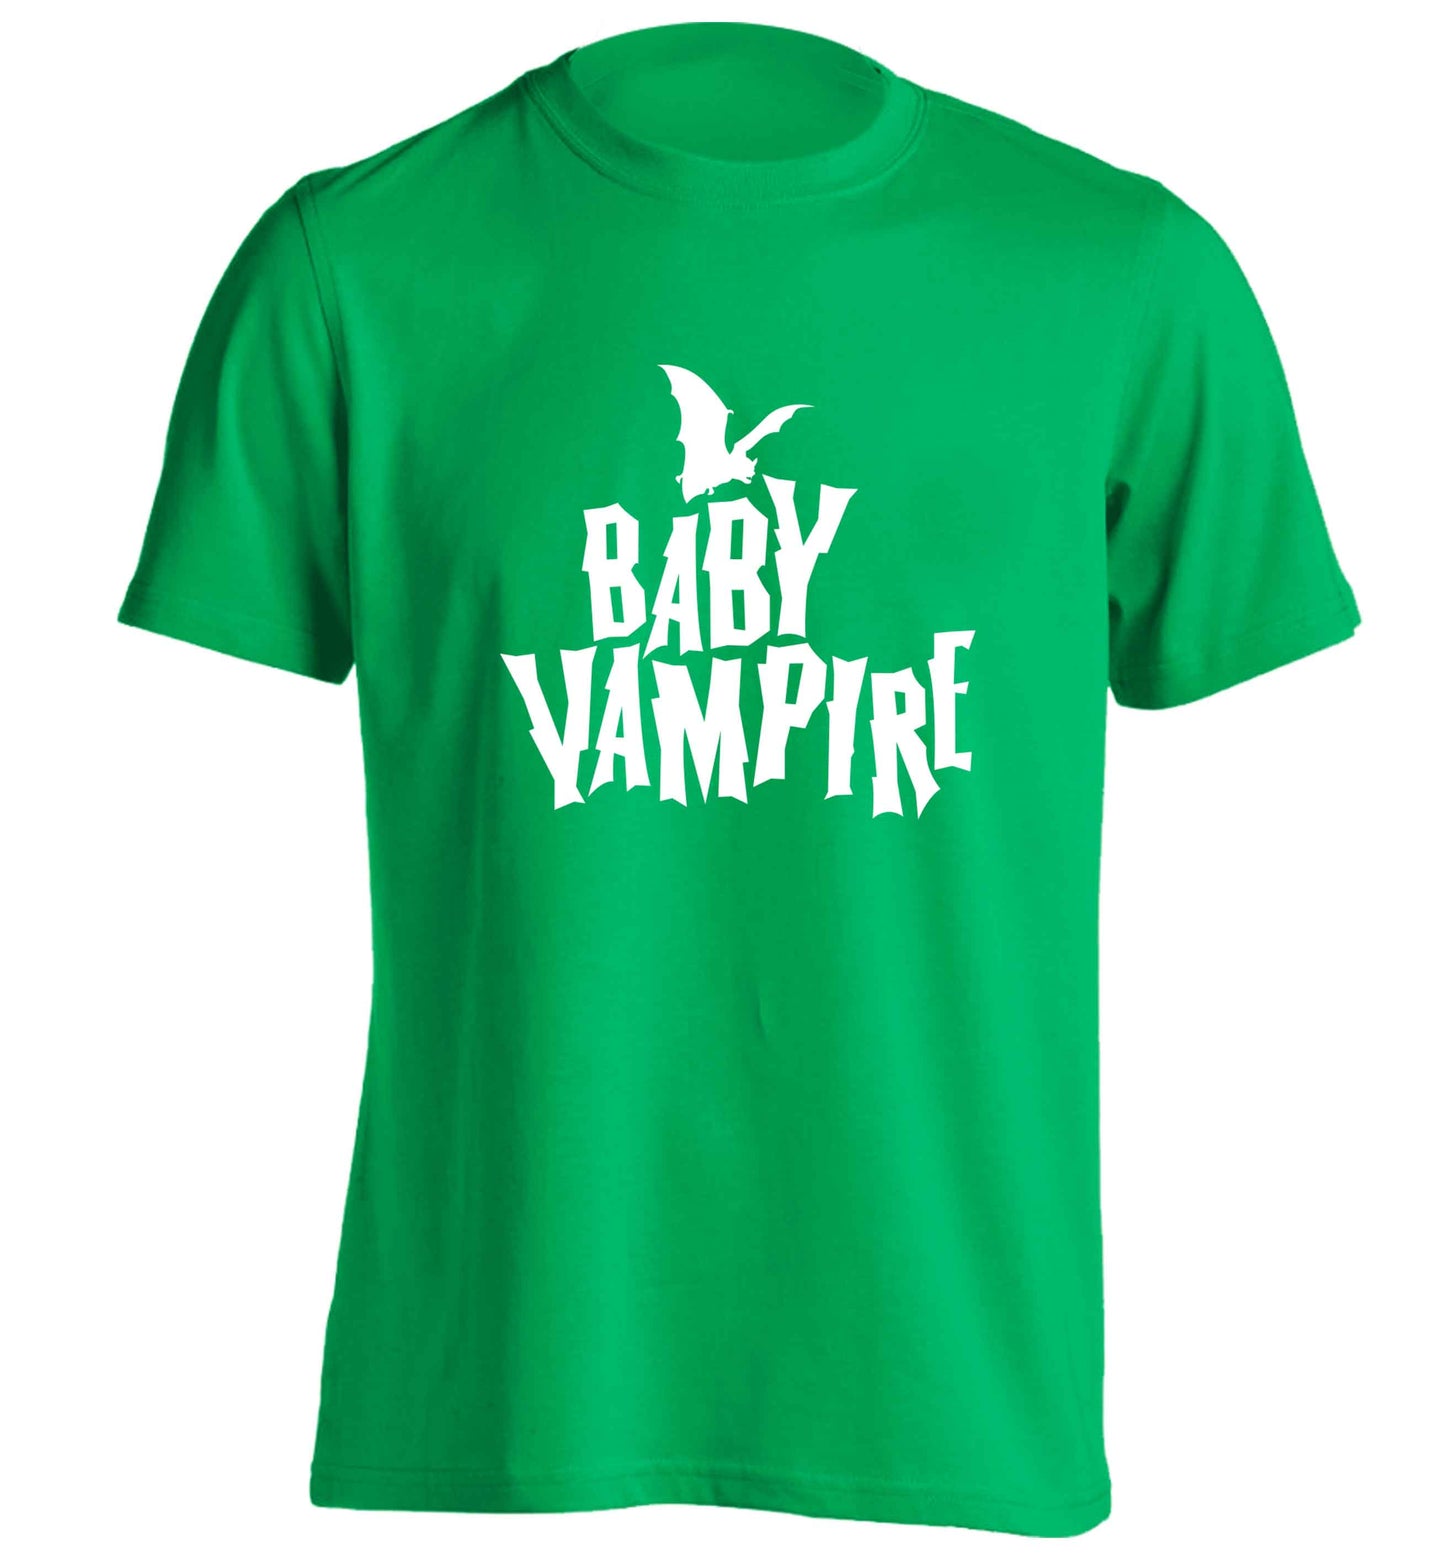 Baby vampire adults unisex green Tshirt 2XL